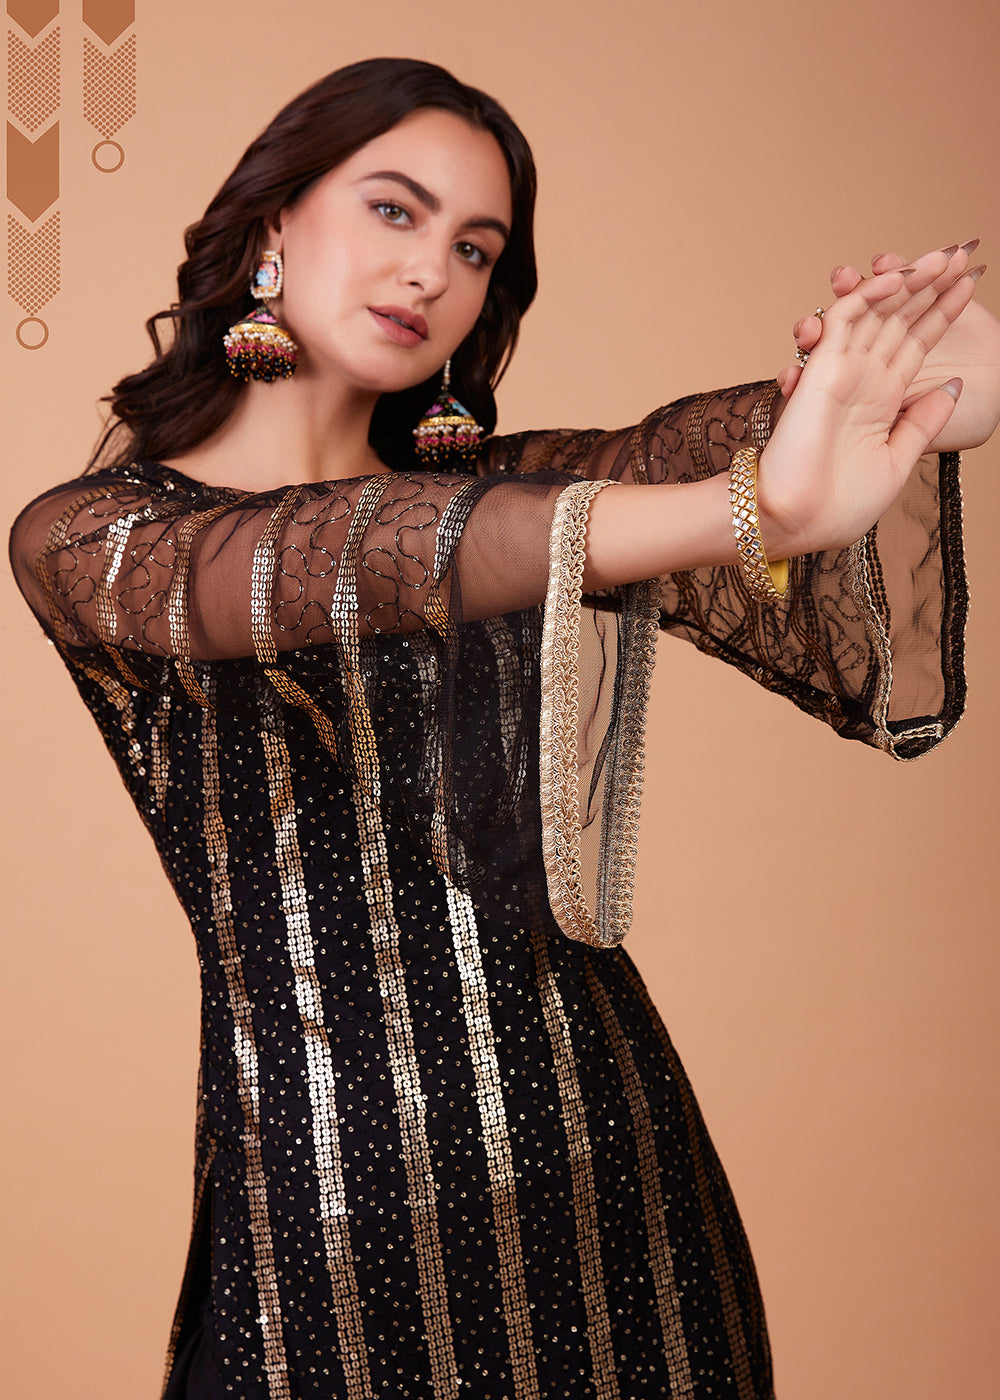 Buy Now Glamorous Black Tone to Tone Thread Net Salwar Kameez Online in USA, UK, Canada & Worldwide at Empress Clothing.